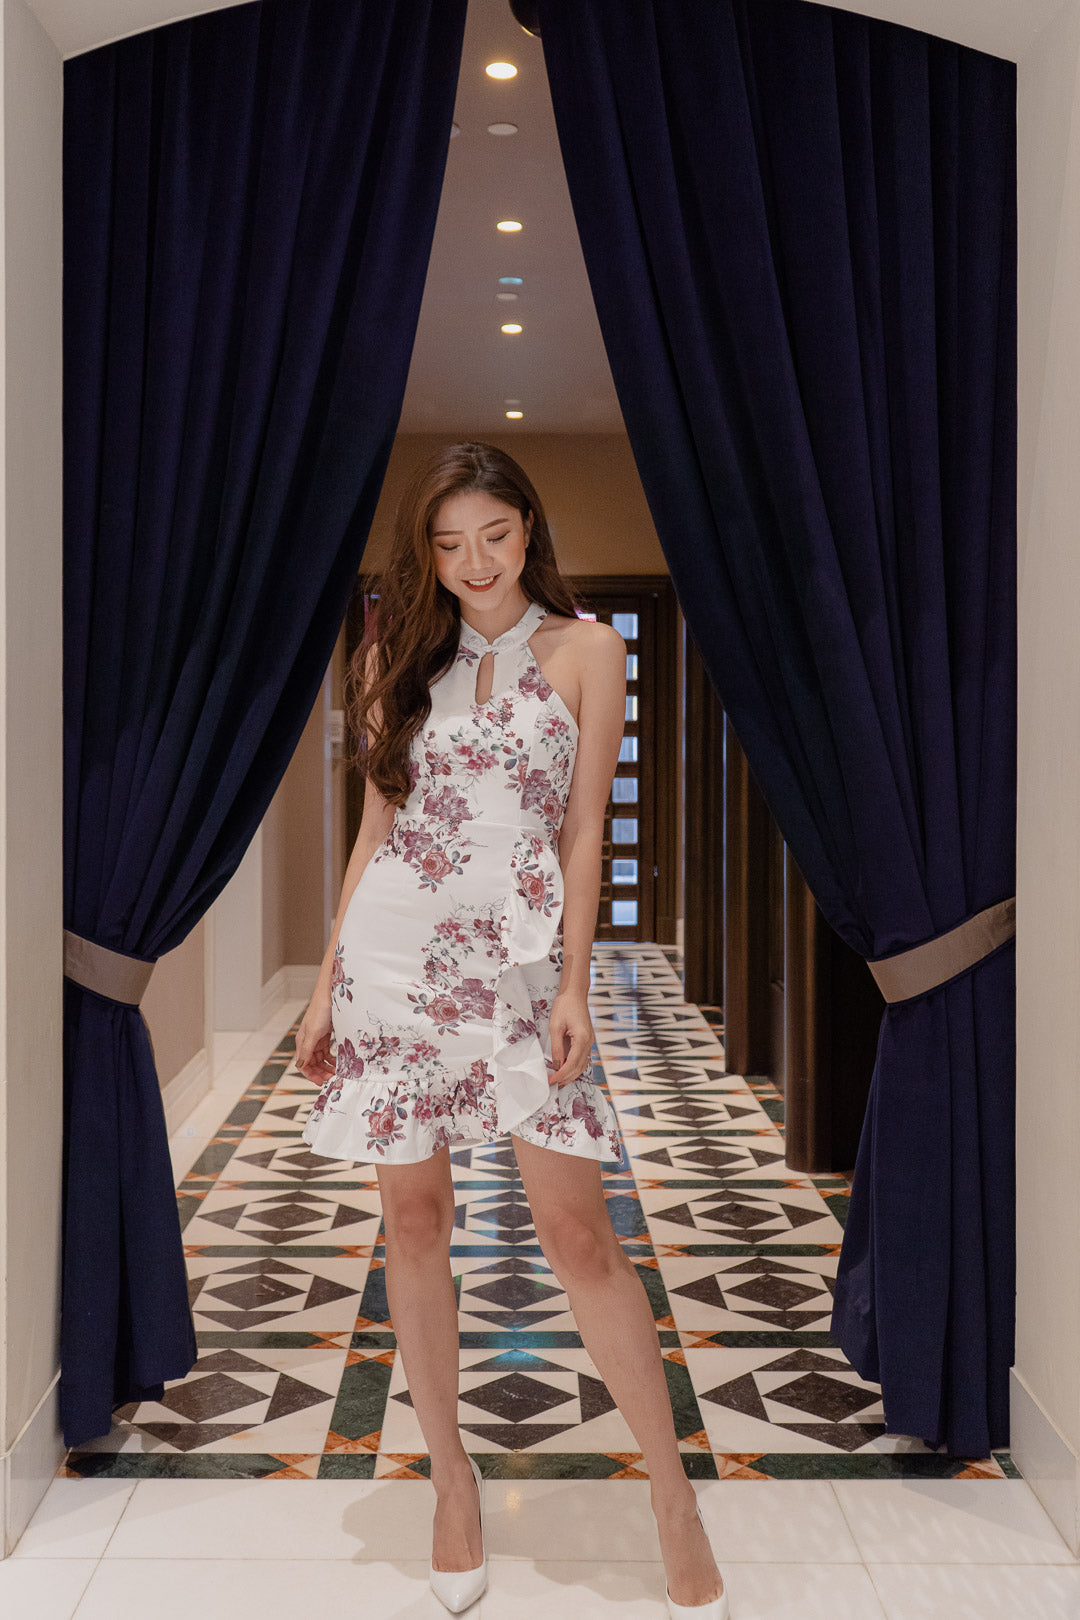 * PREMIUM * - Camilia Oriental Cheongsam Dress in White - Self Manufactured by LBRLABEL